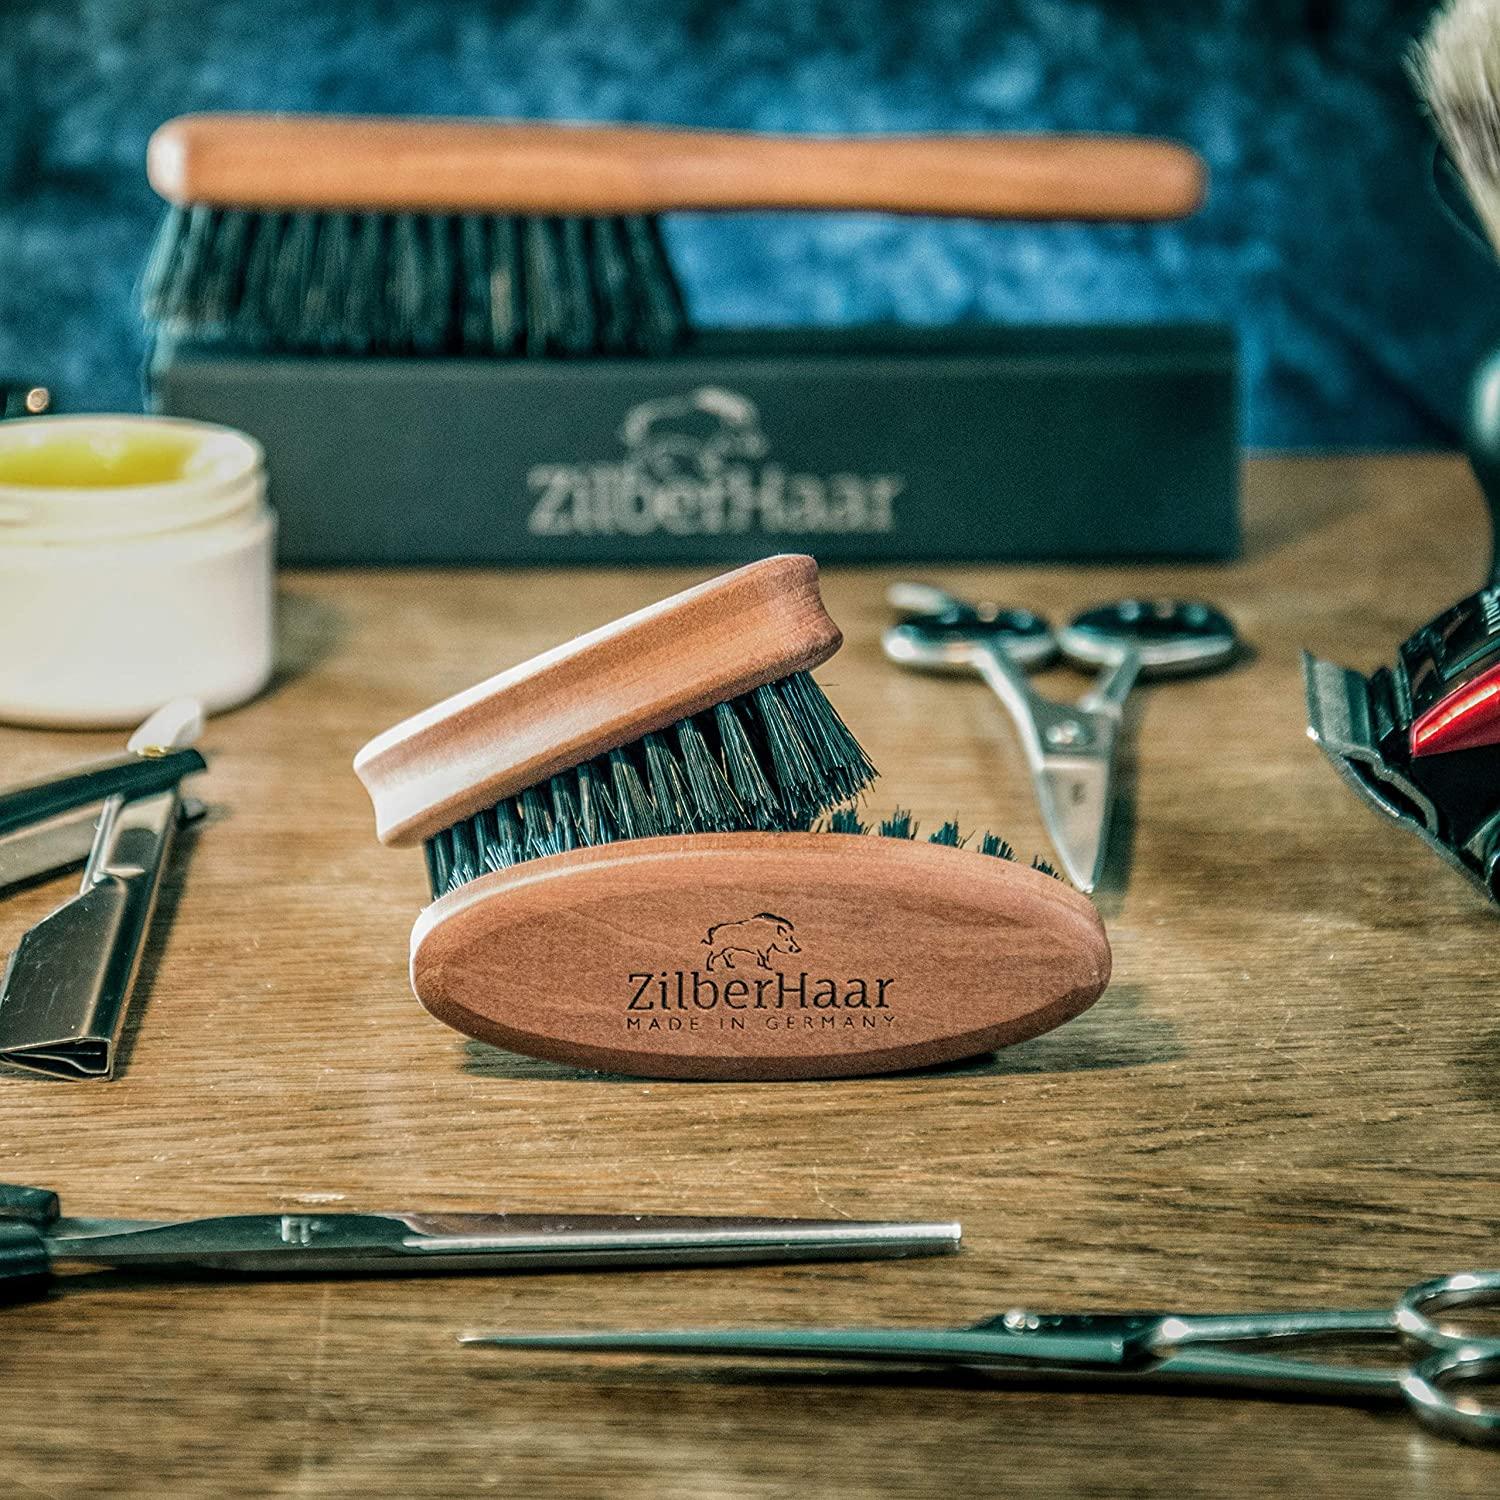 ZilberHaar Brush Cleaning Tool